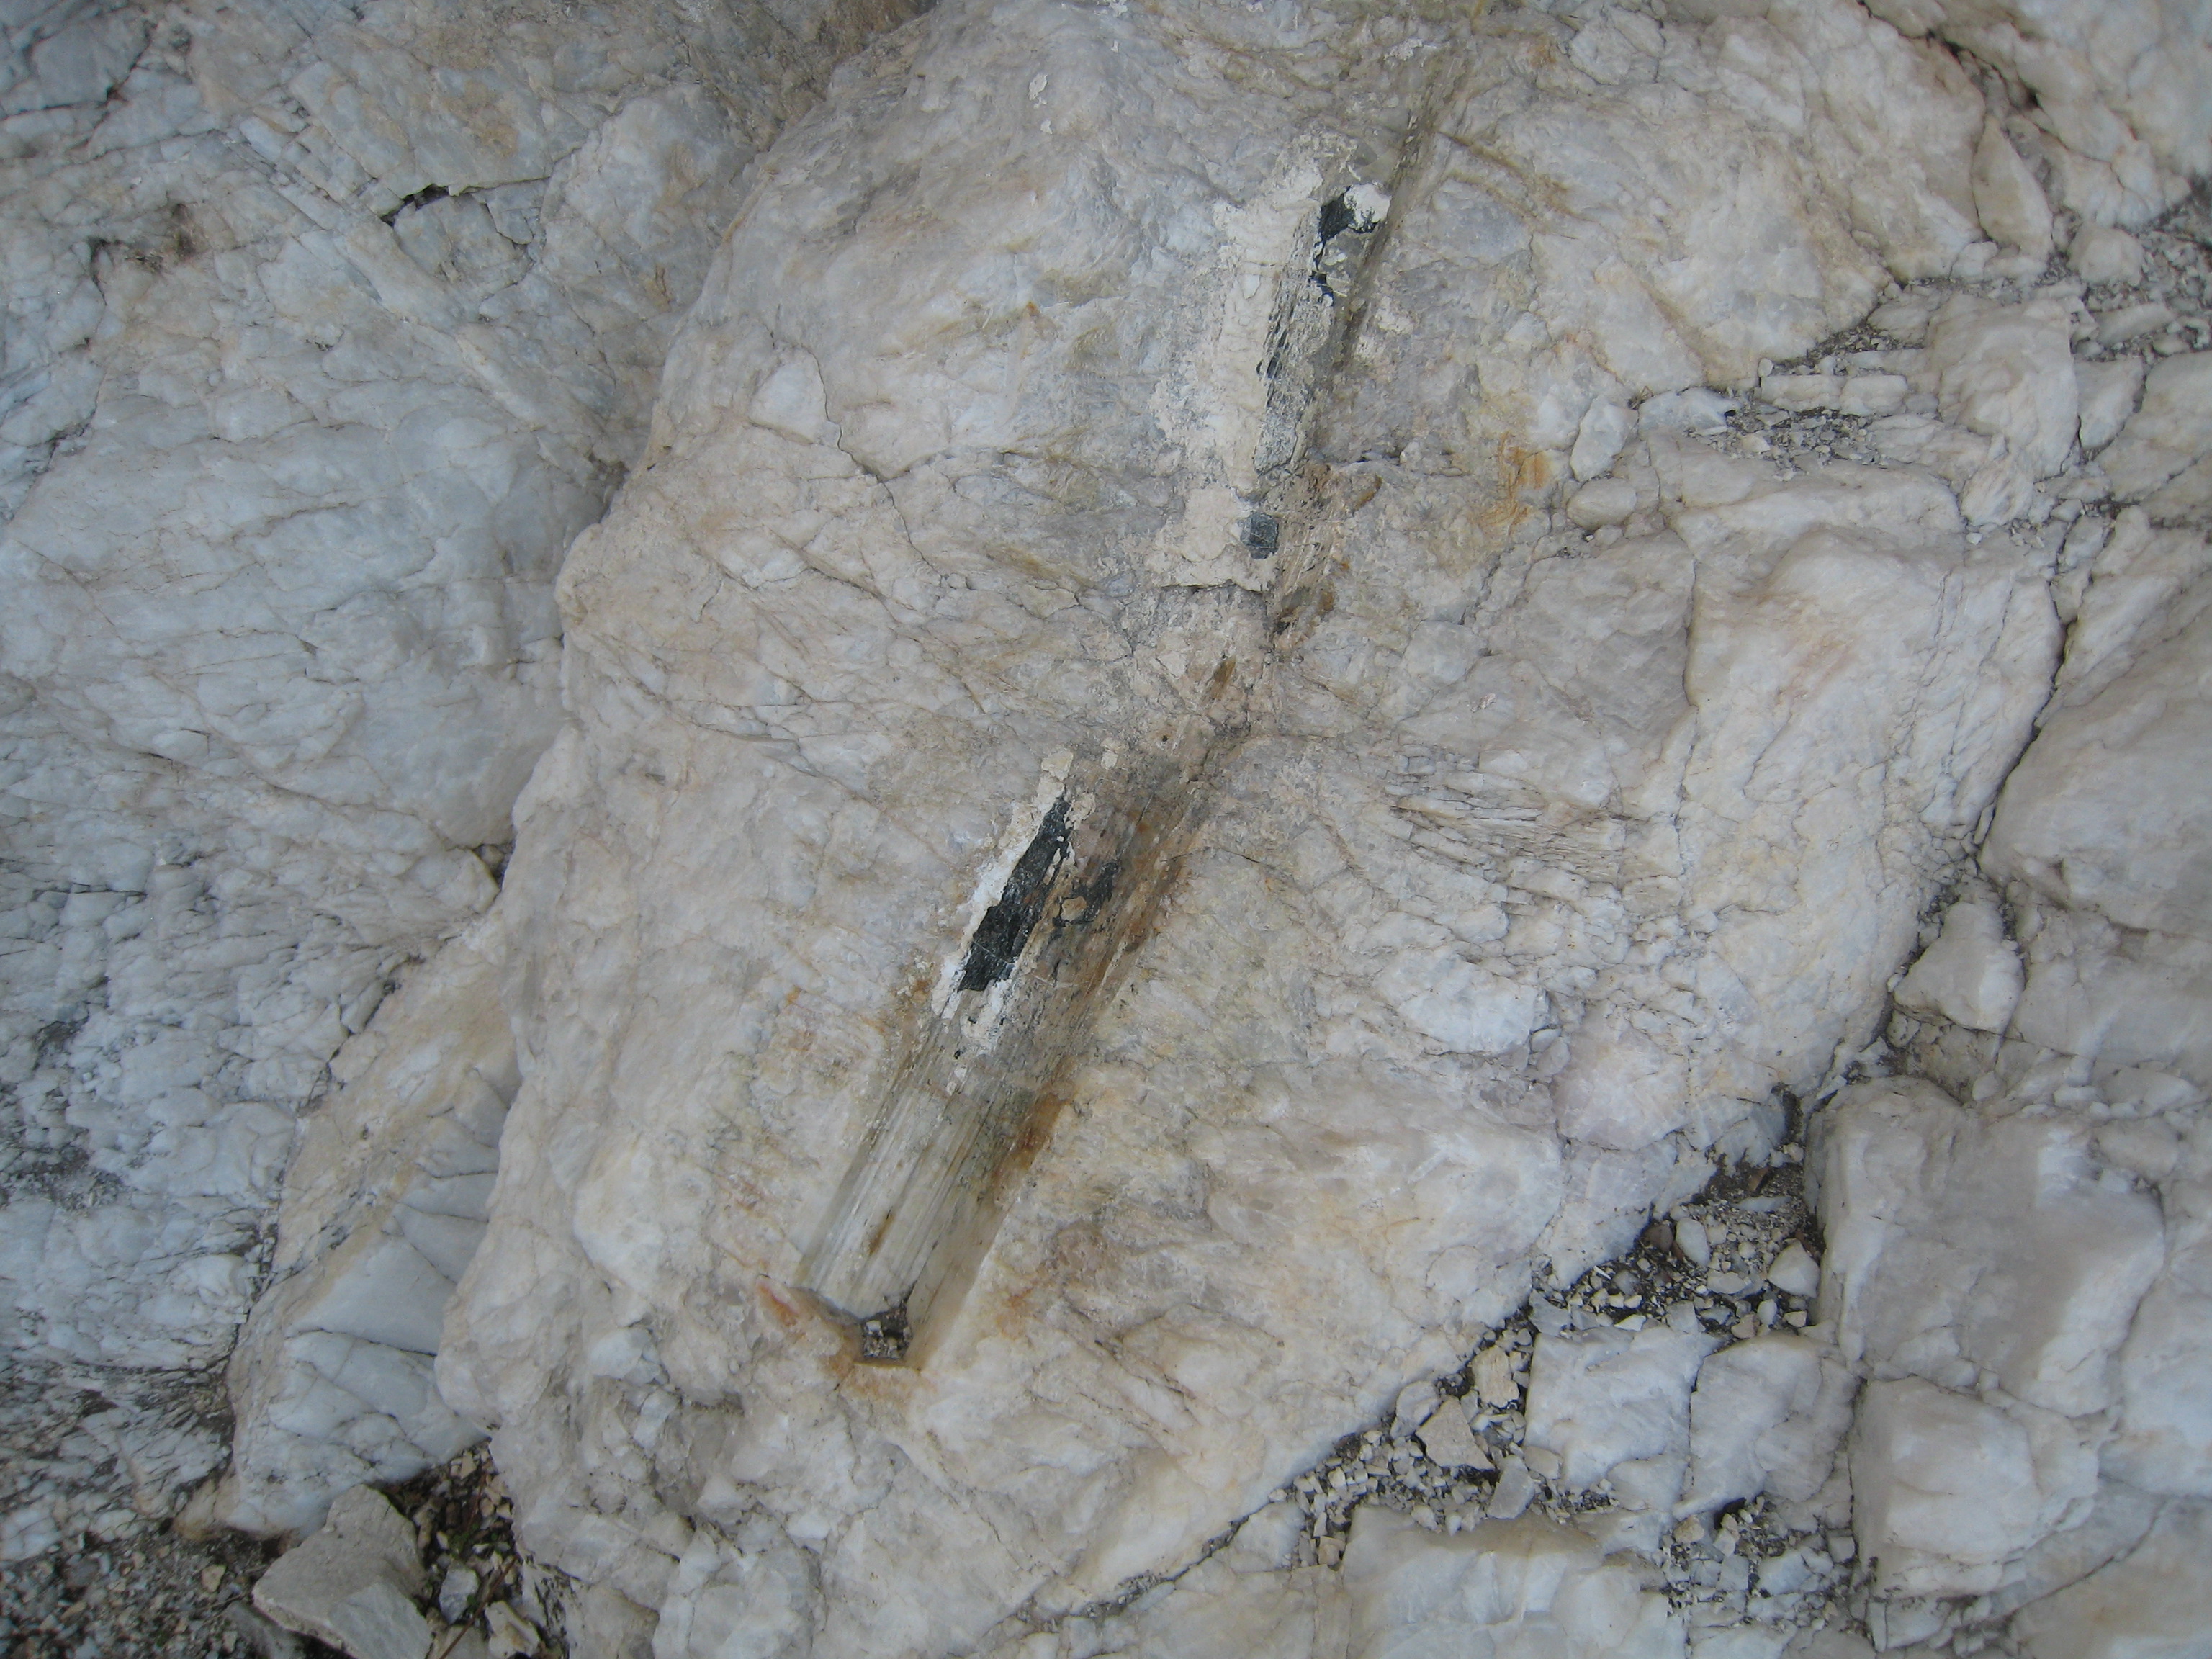 Tourmaline was here, about 2.5 feet long.  Tourmaline forms hexagonal crystals in quartz.